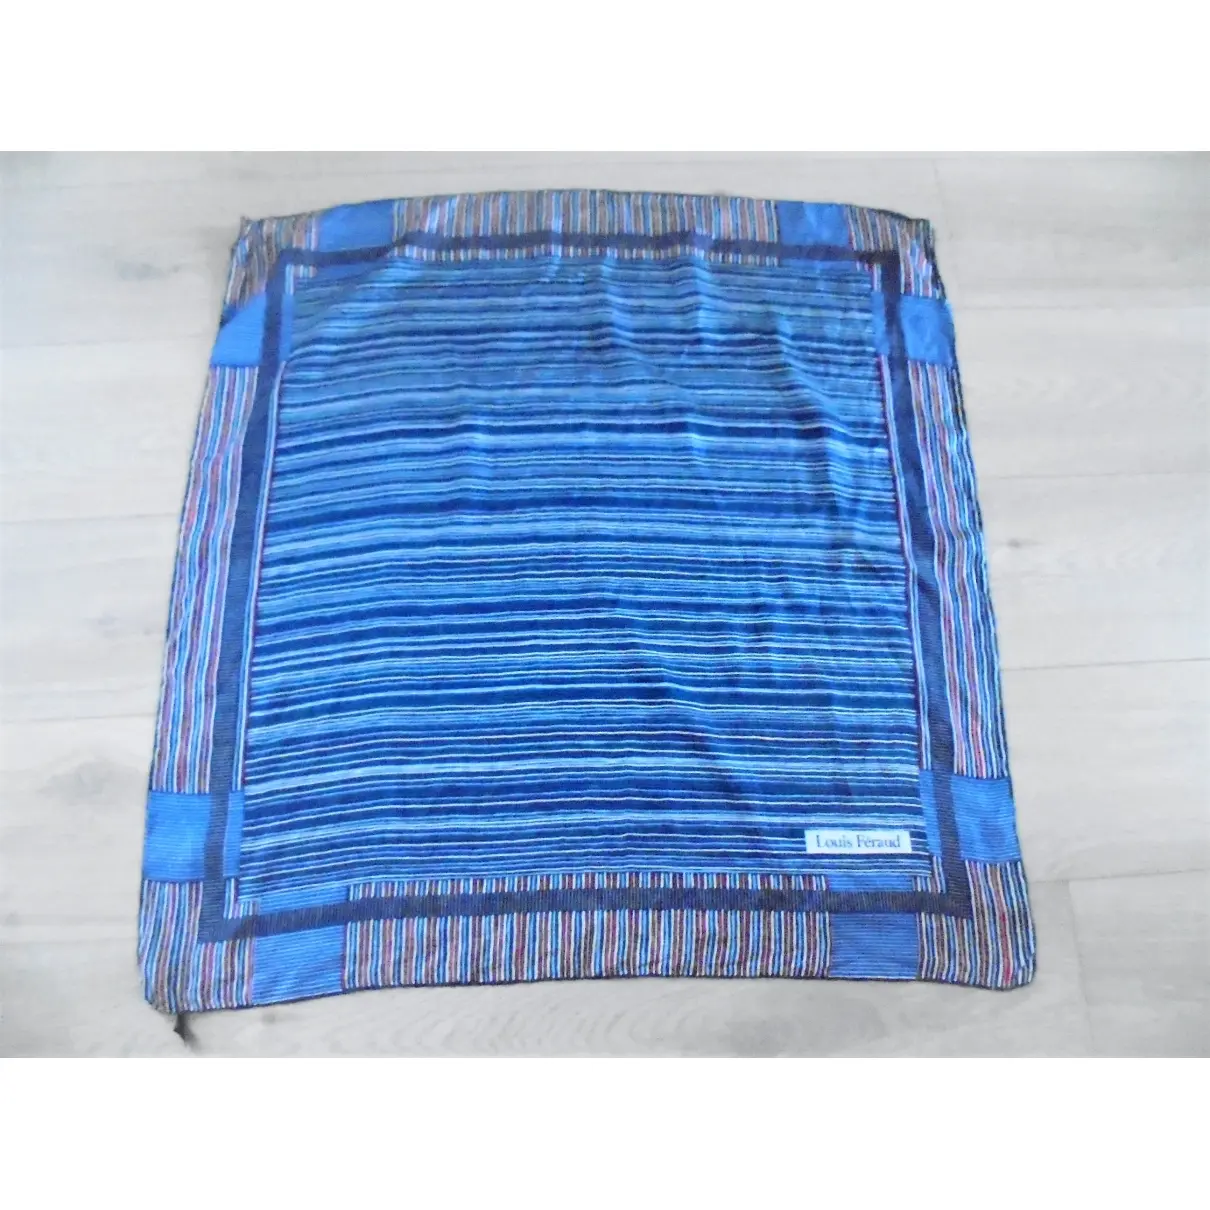 Louis Feraud Silk handkerchief for sale